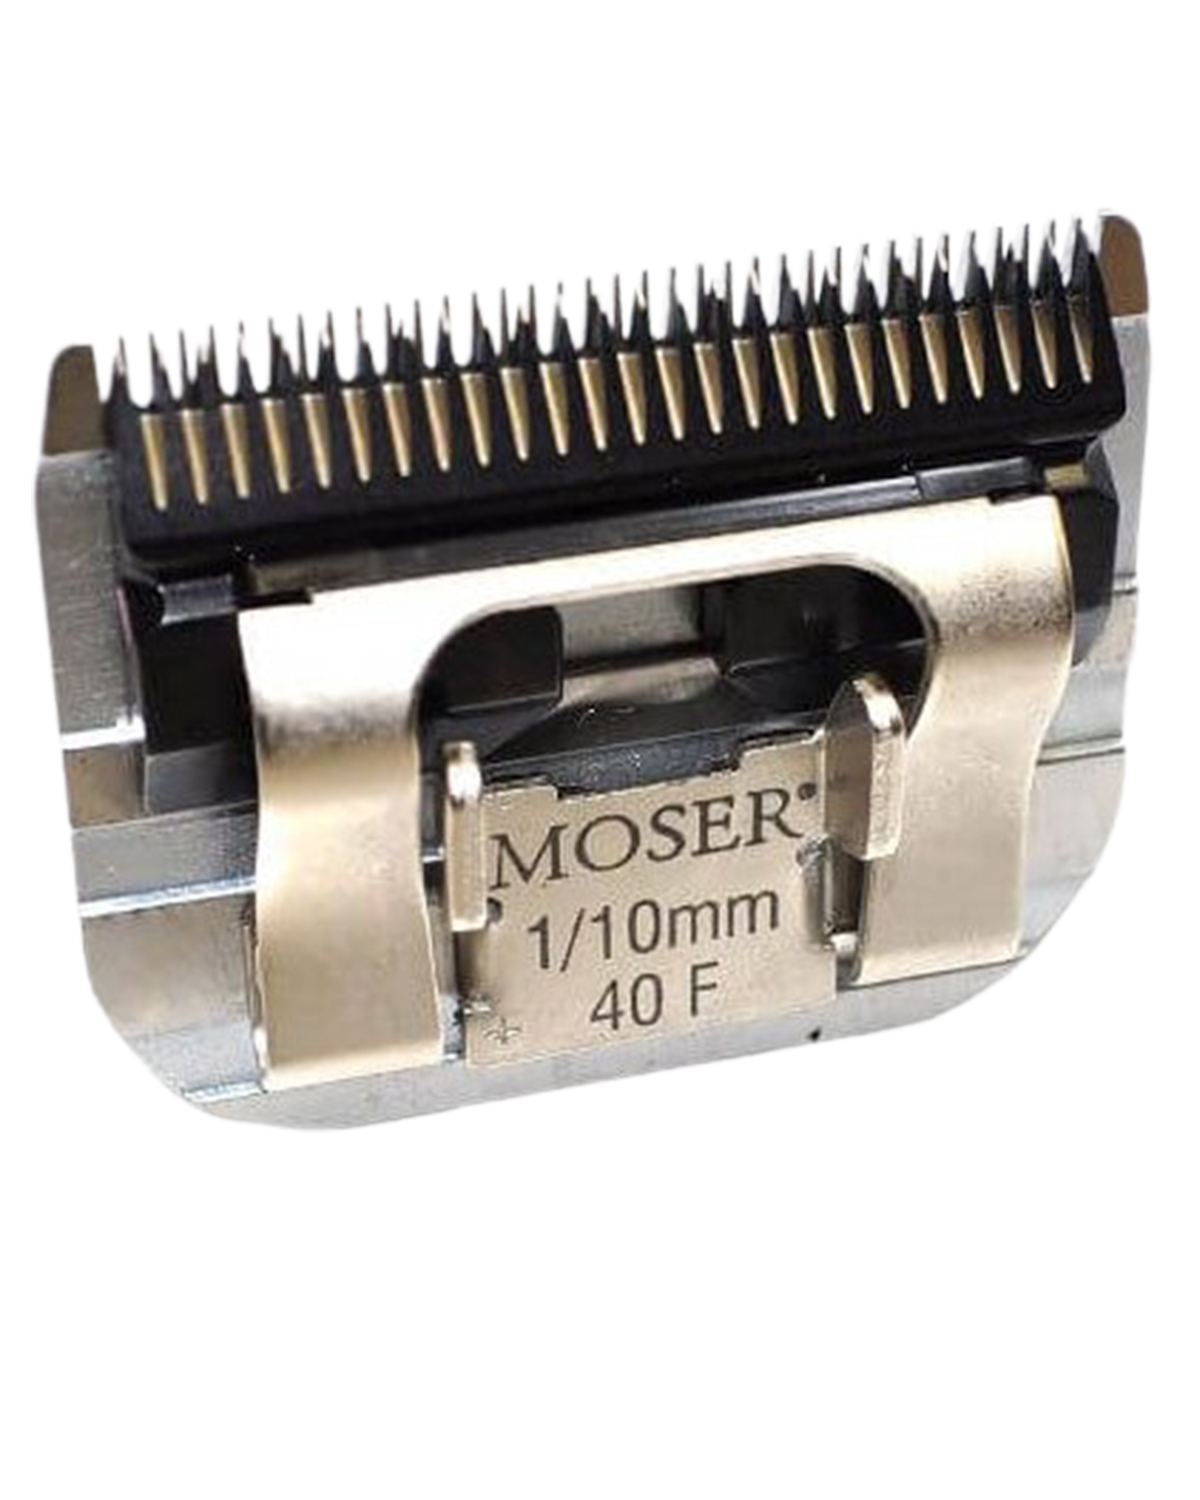 Ножи для машинки мозер. Ножевой блок Moser 1245-7310, 1/10 мм, стандарт а5. Moser 1245-7310. Нож Moser 1245-7310. Ножевой блок Moser 0,1mm.